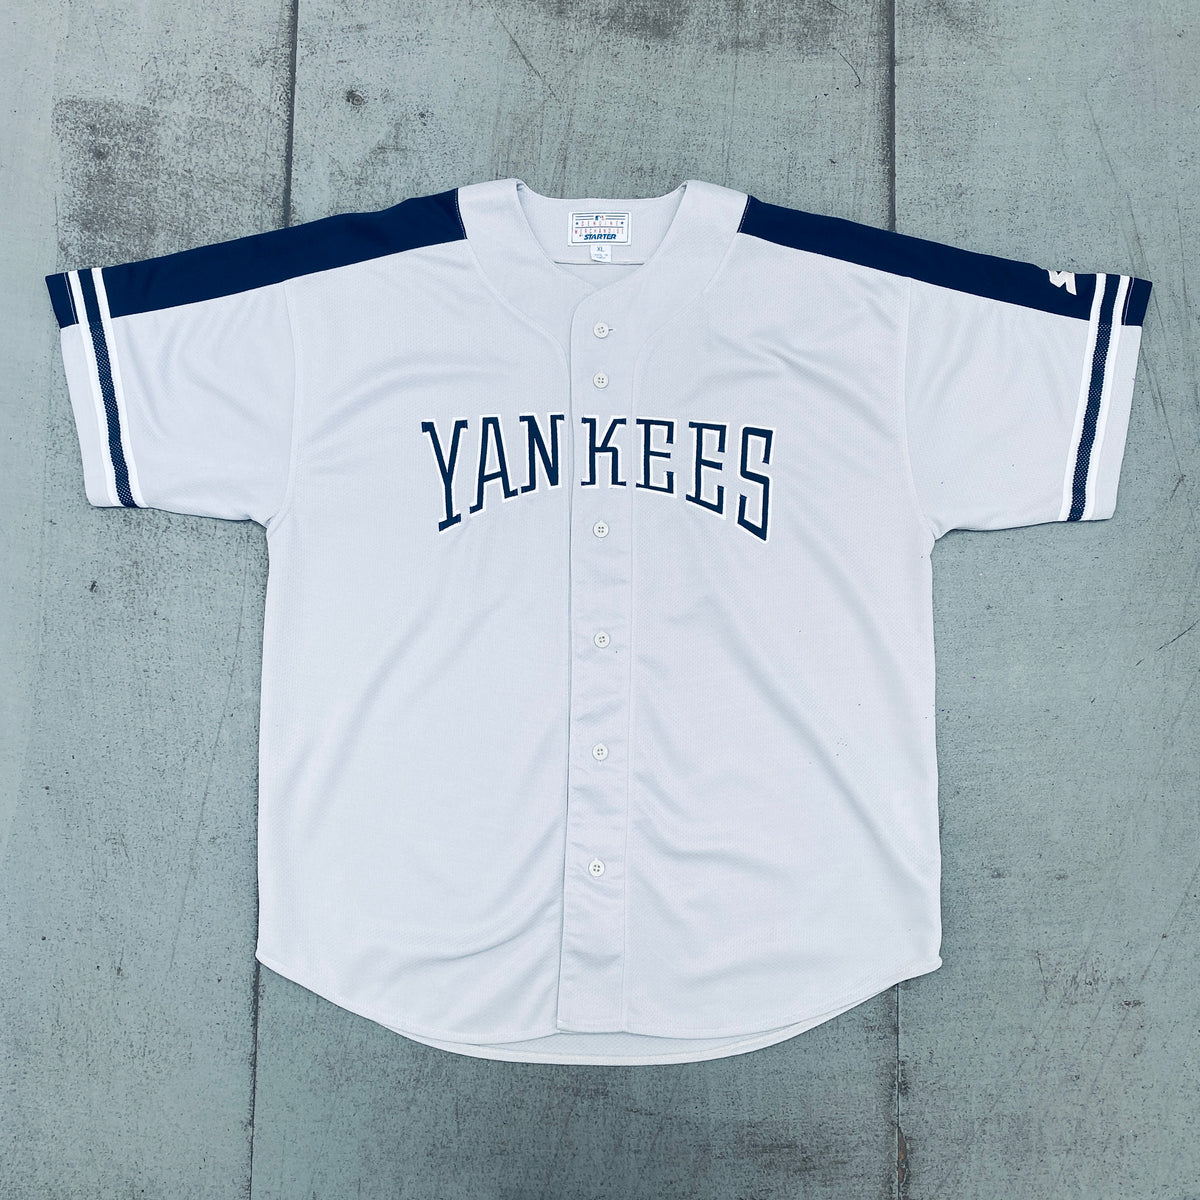 New York Yankees Apparel - Yankees Shop, Merchandise, Gear